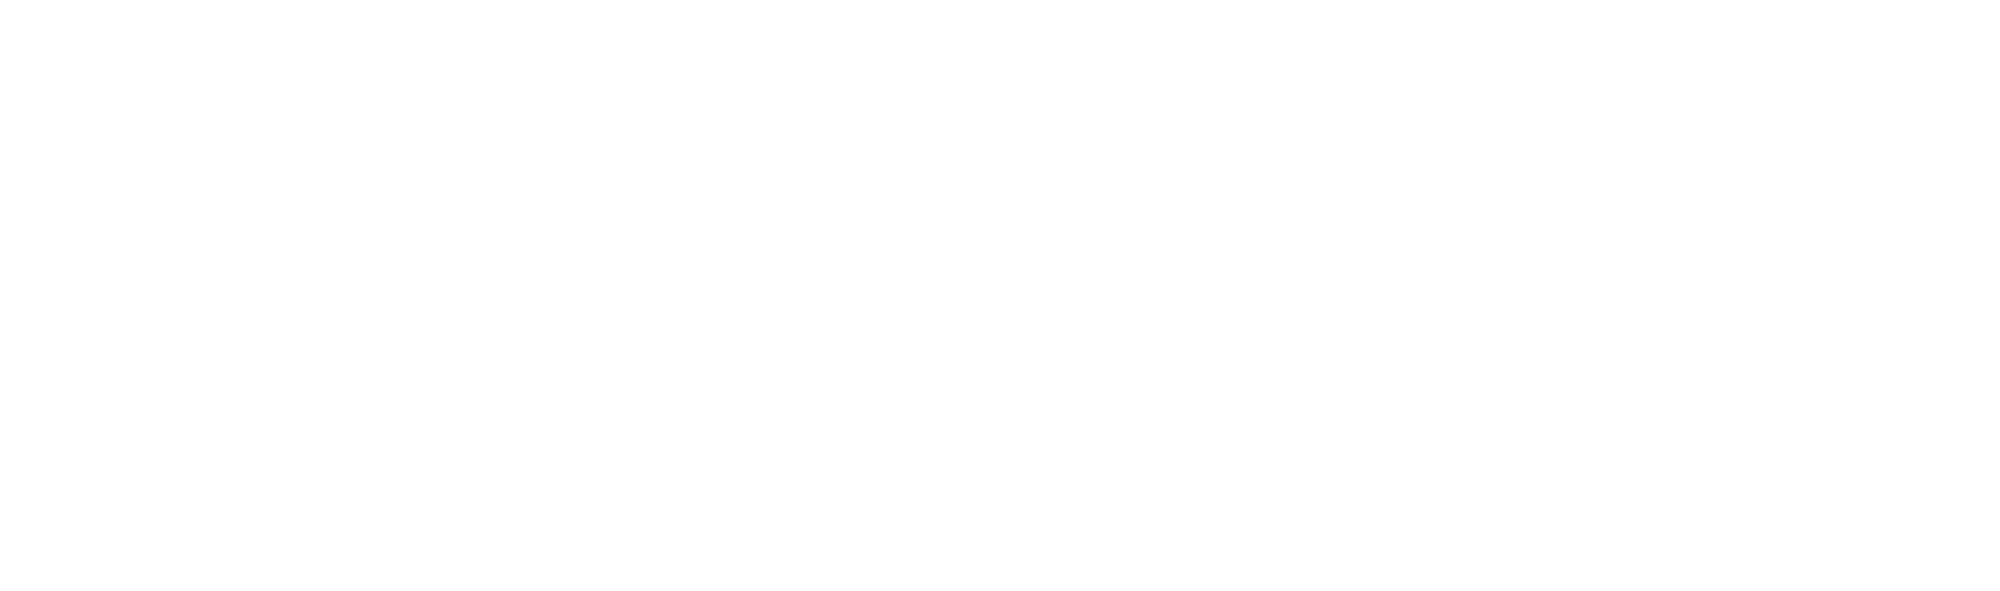 J.A. Woollam Company Logo